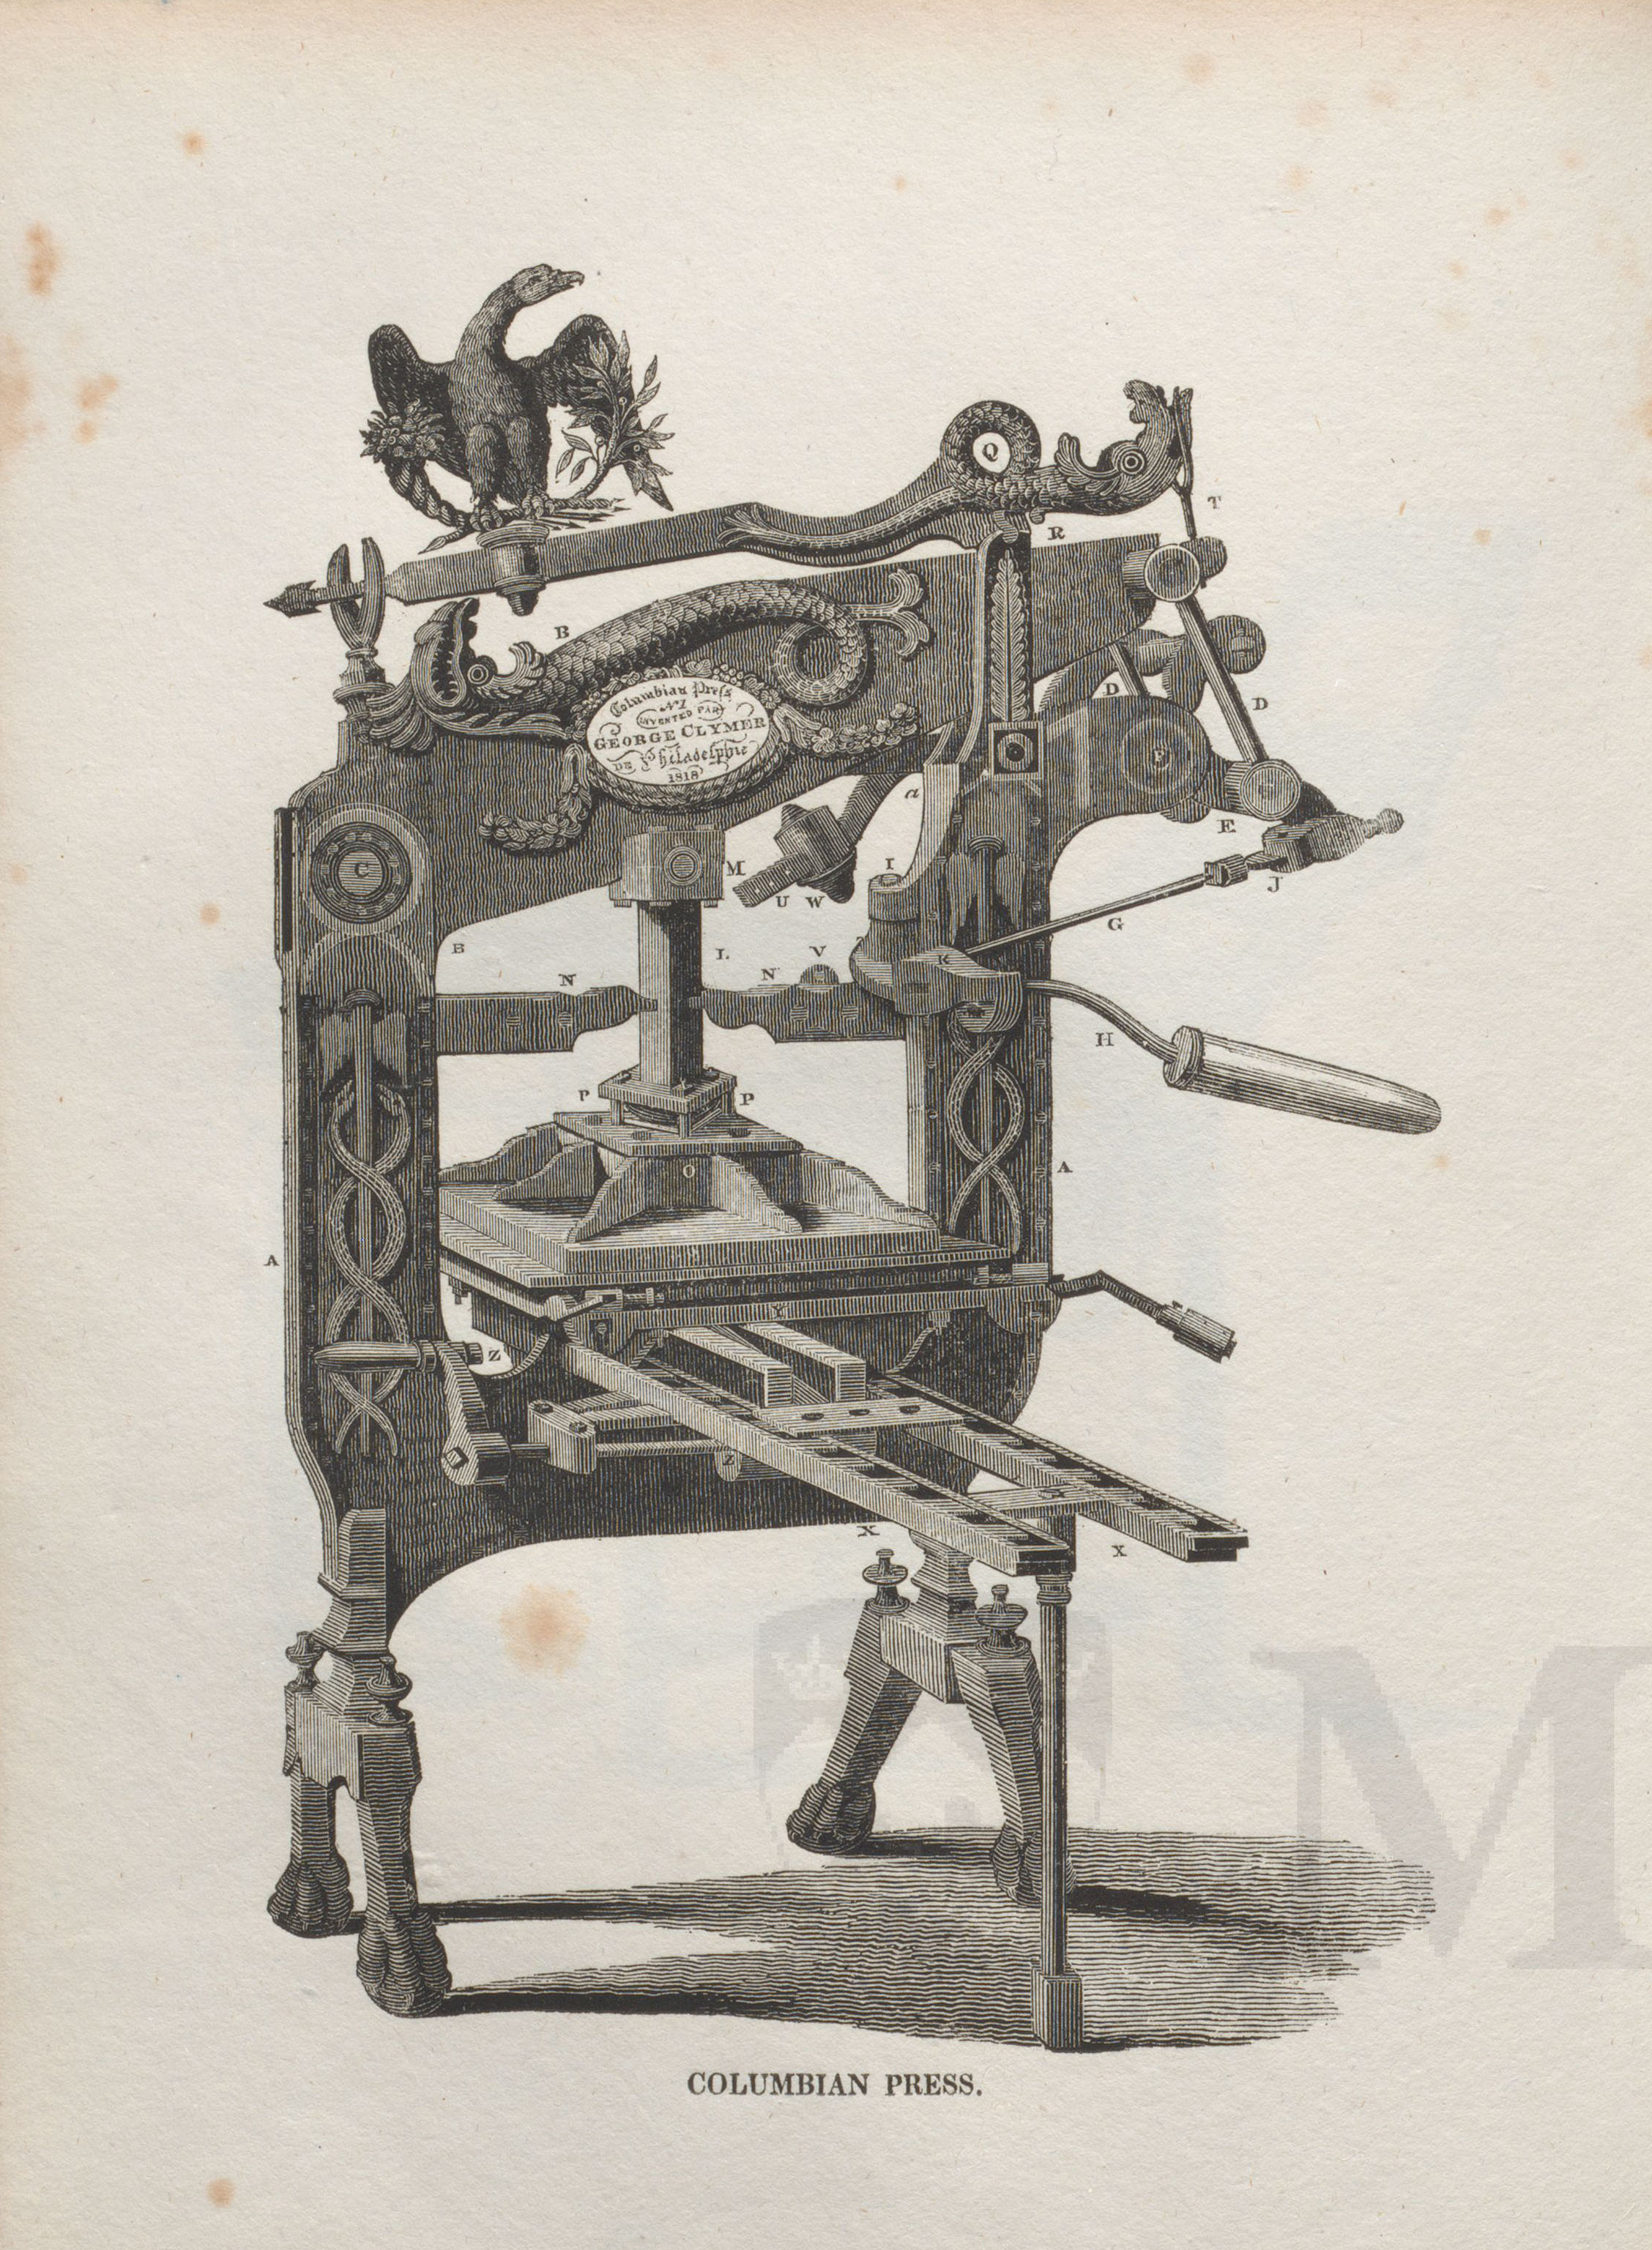 The Columbian Press – “phantasmagoria in cast iron” | Rare Books and ...